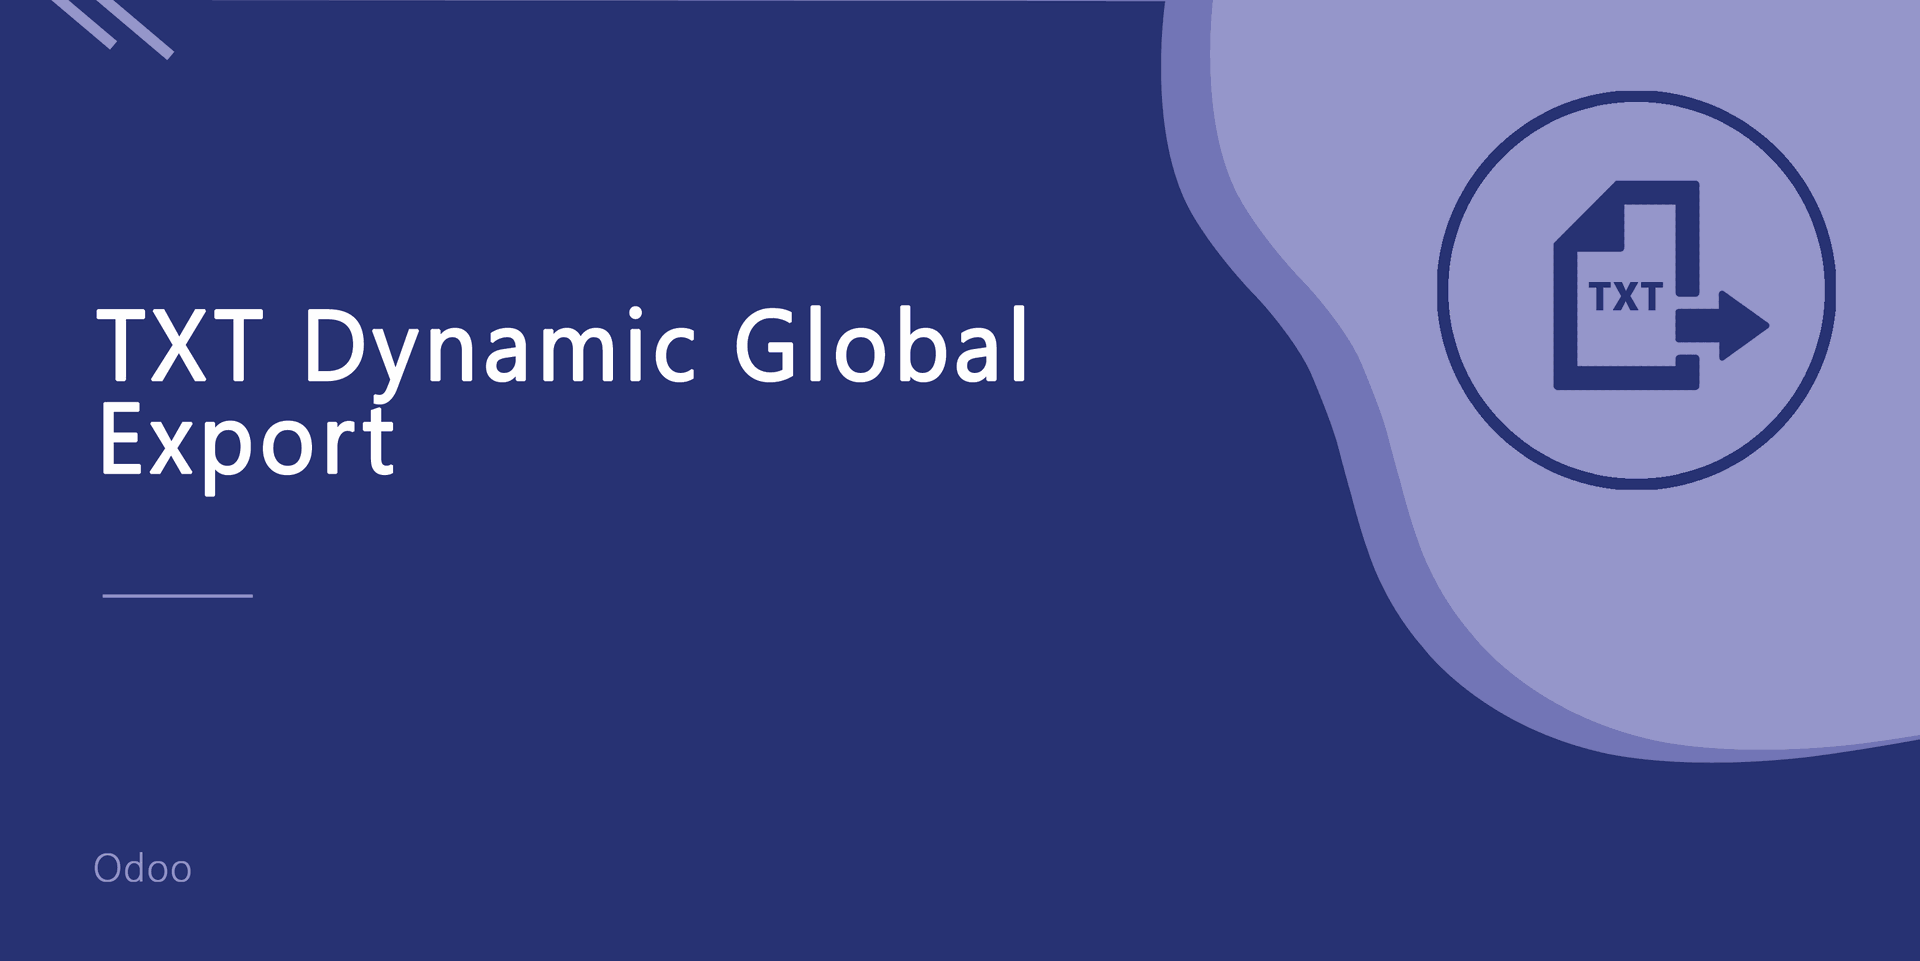 TXT Dynamic Global Export